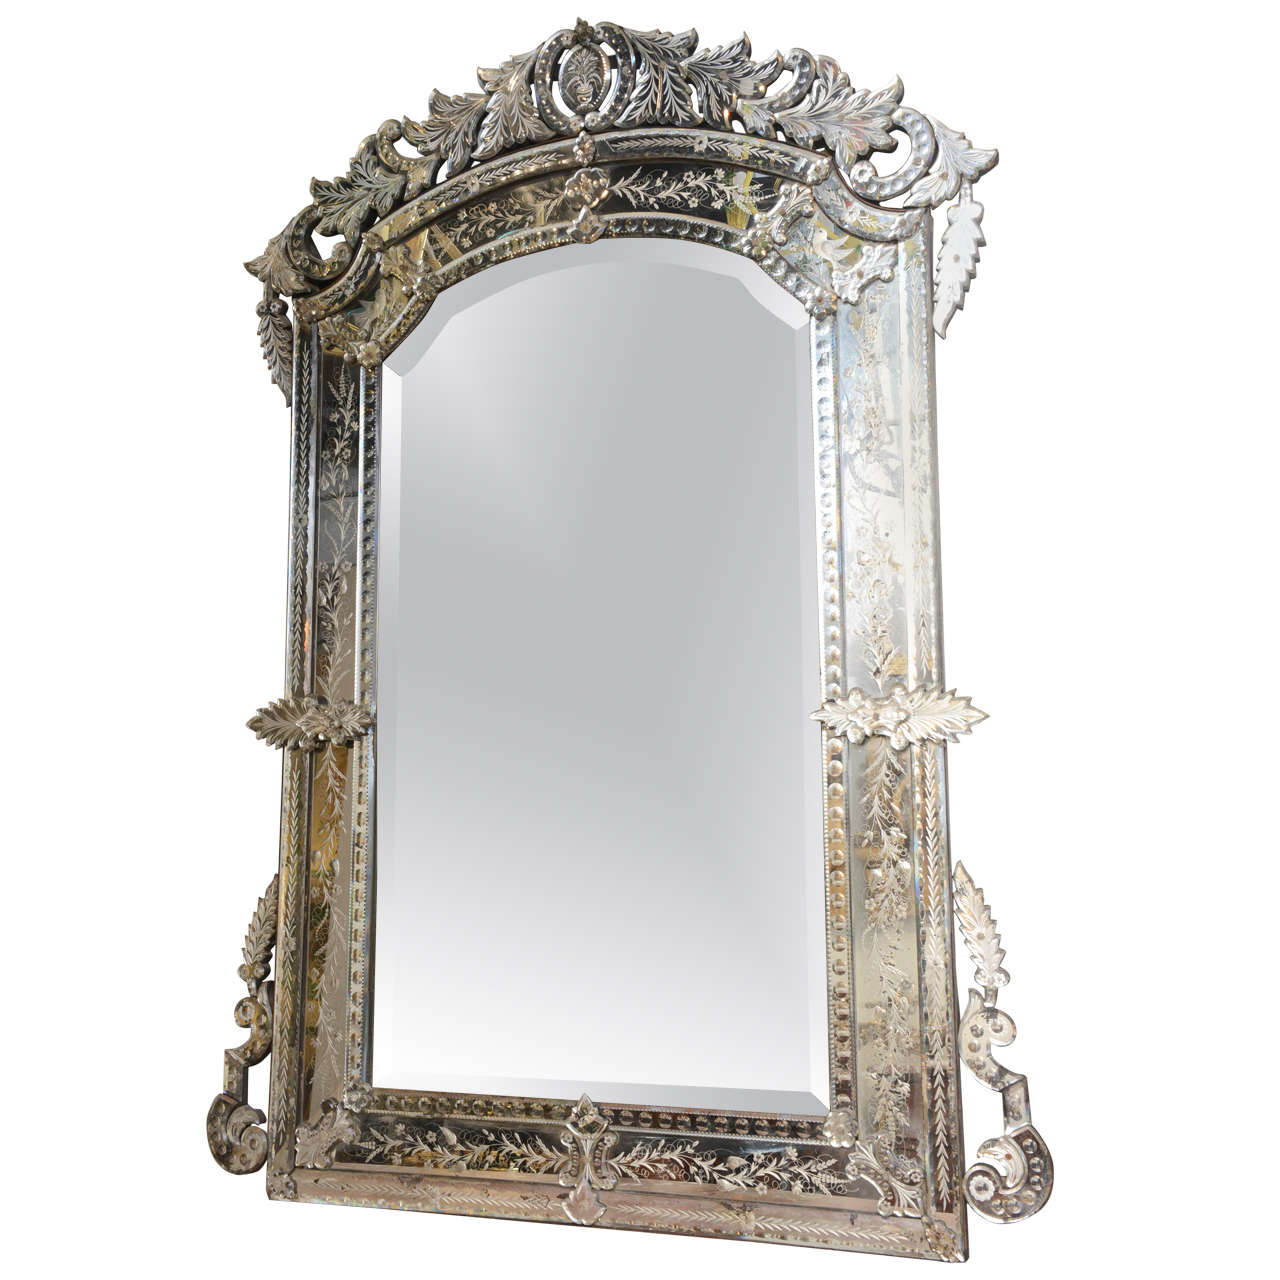 Exceptional Grand 19th Century Venetian Mirror